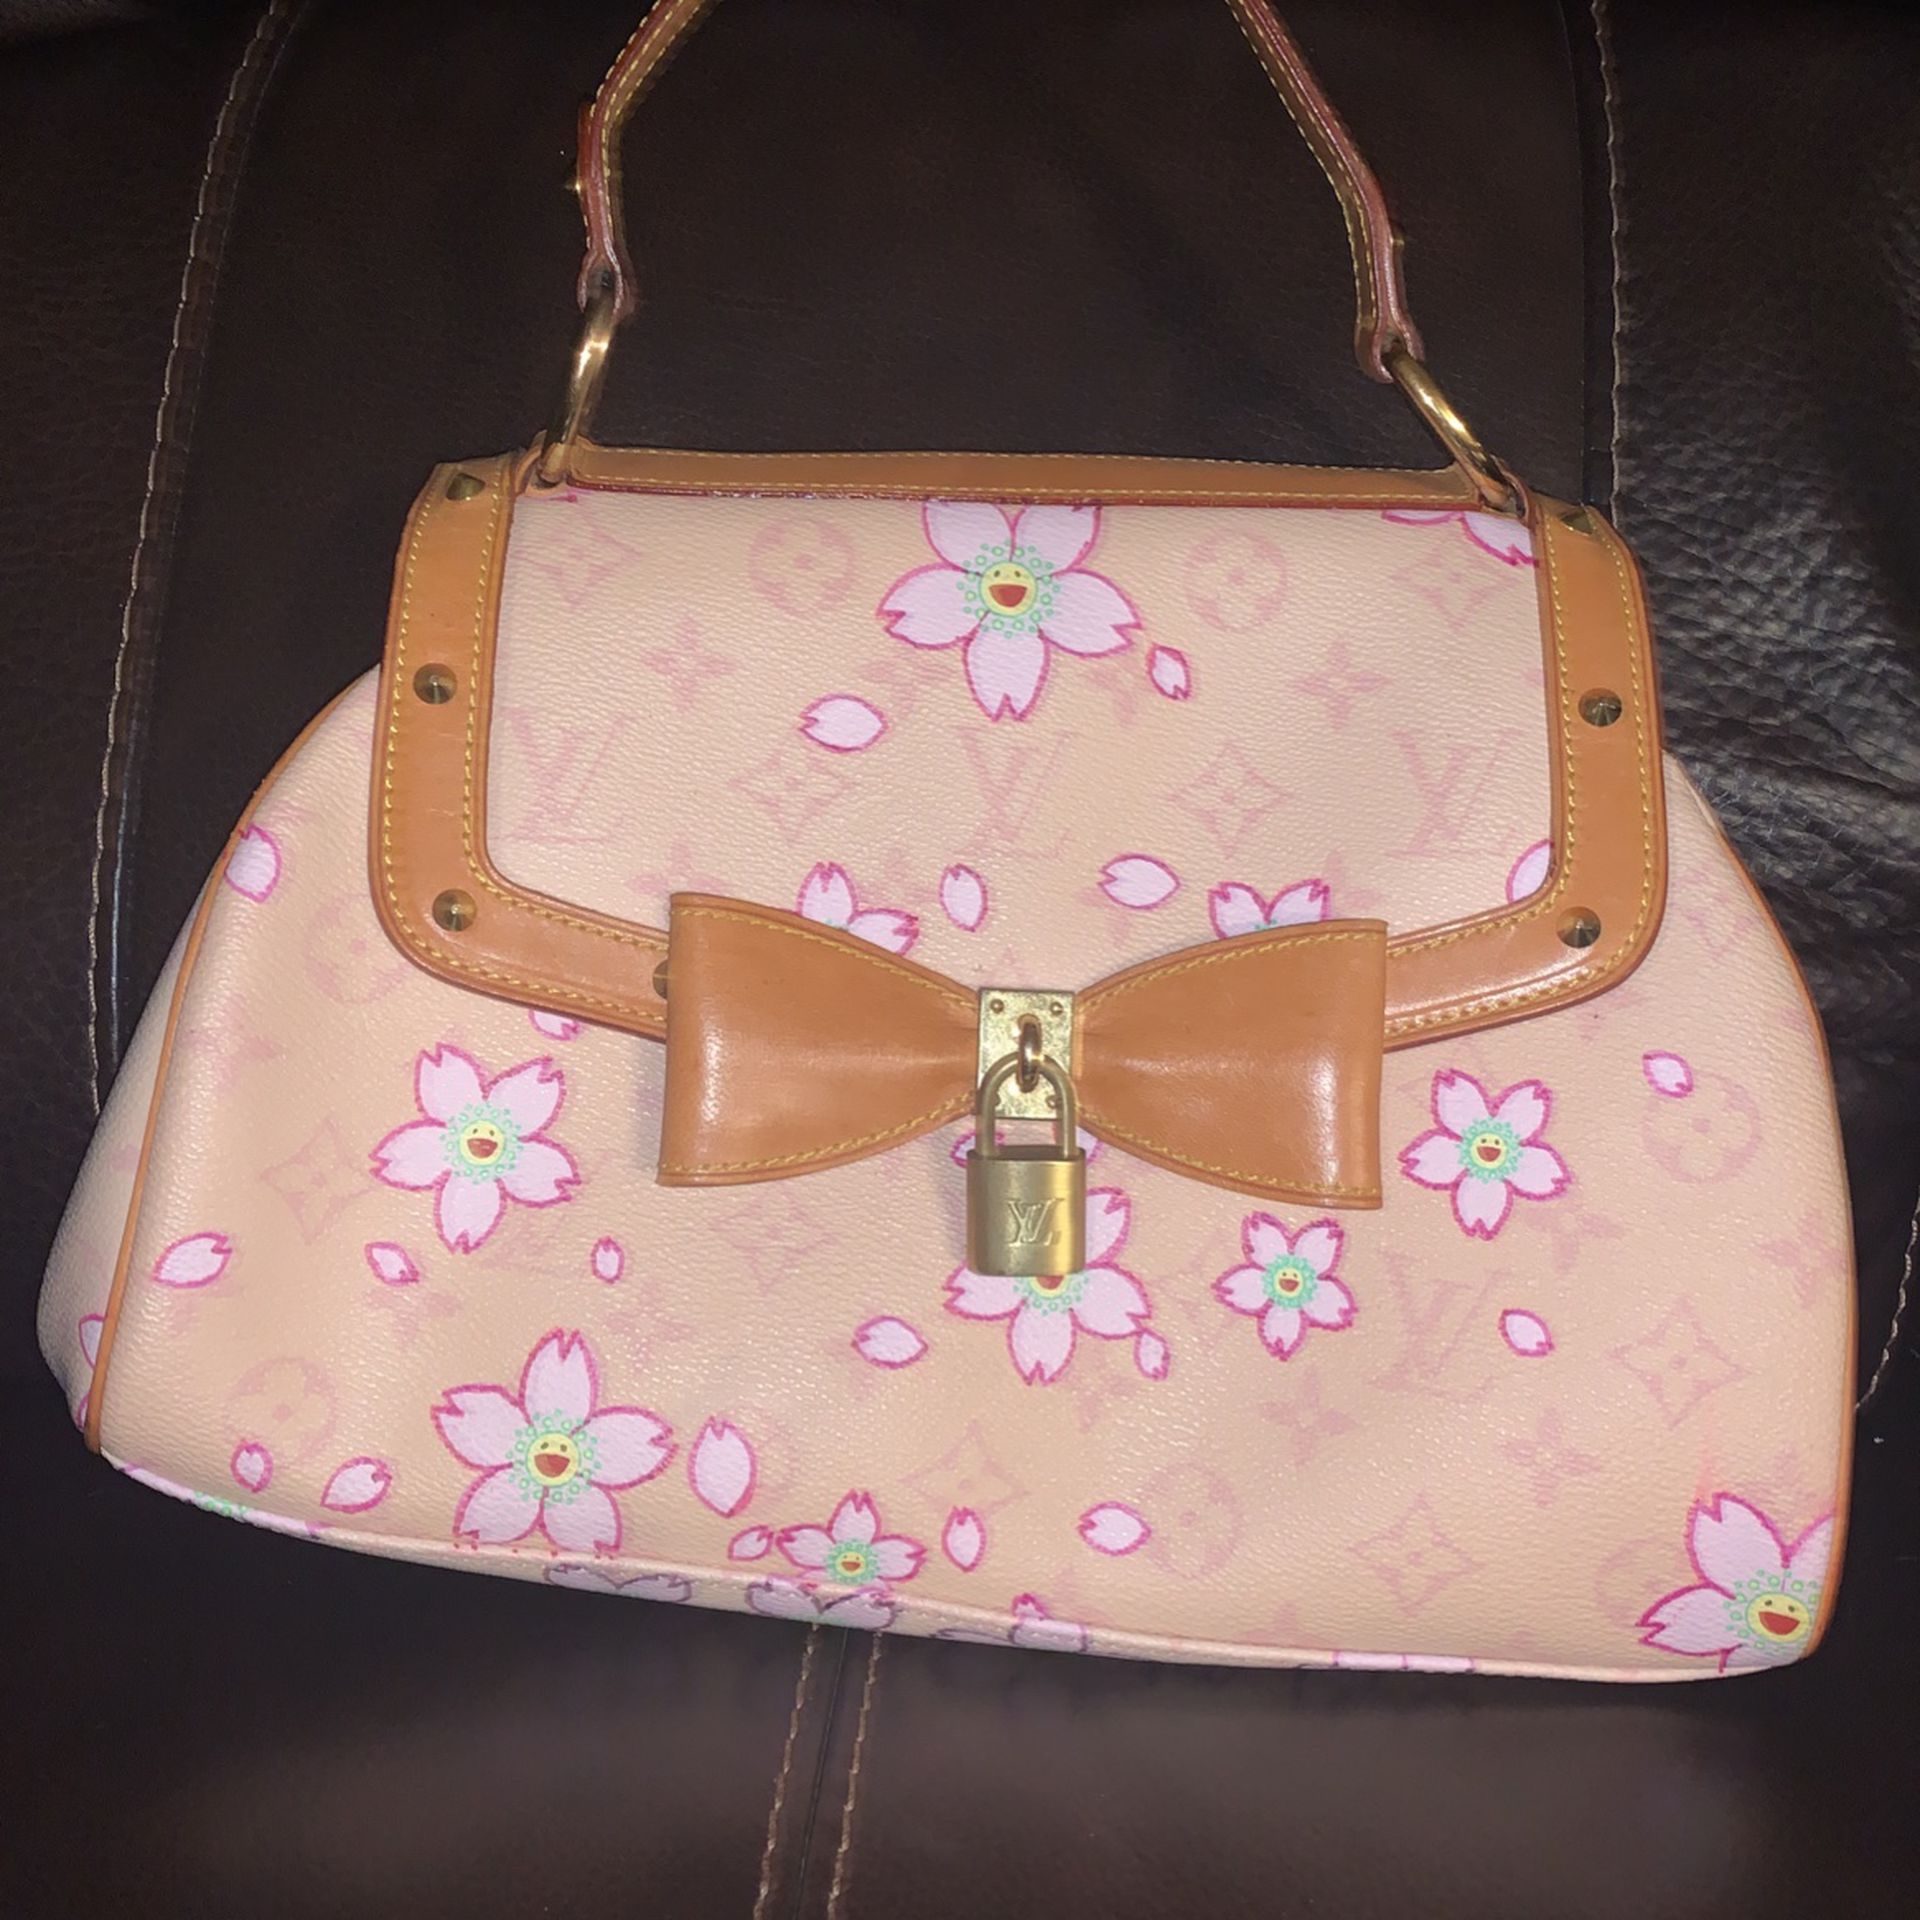 Sell Louis Vuitton Cherry Blossom Sac Retro Bag - Pink